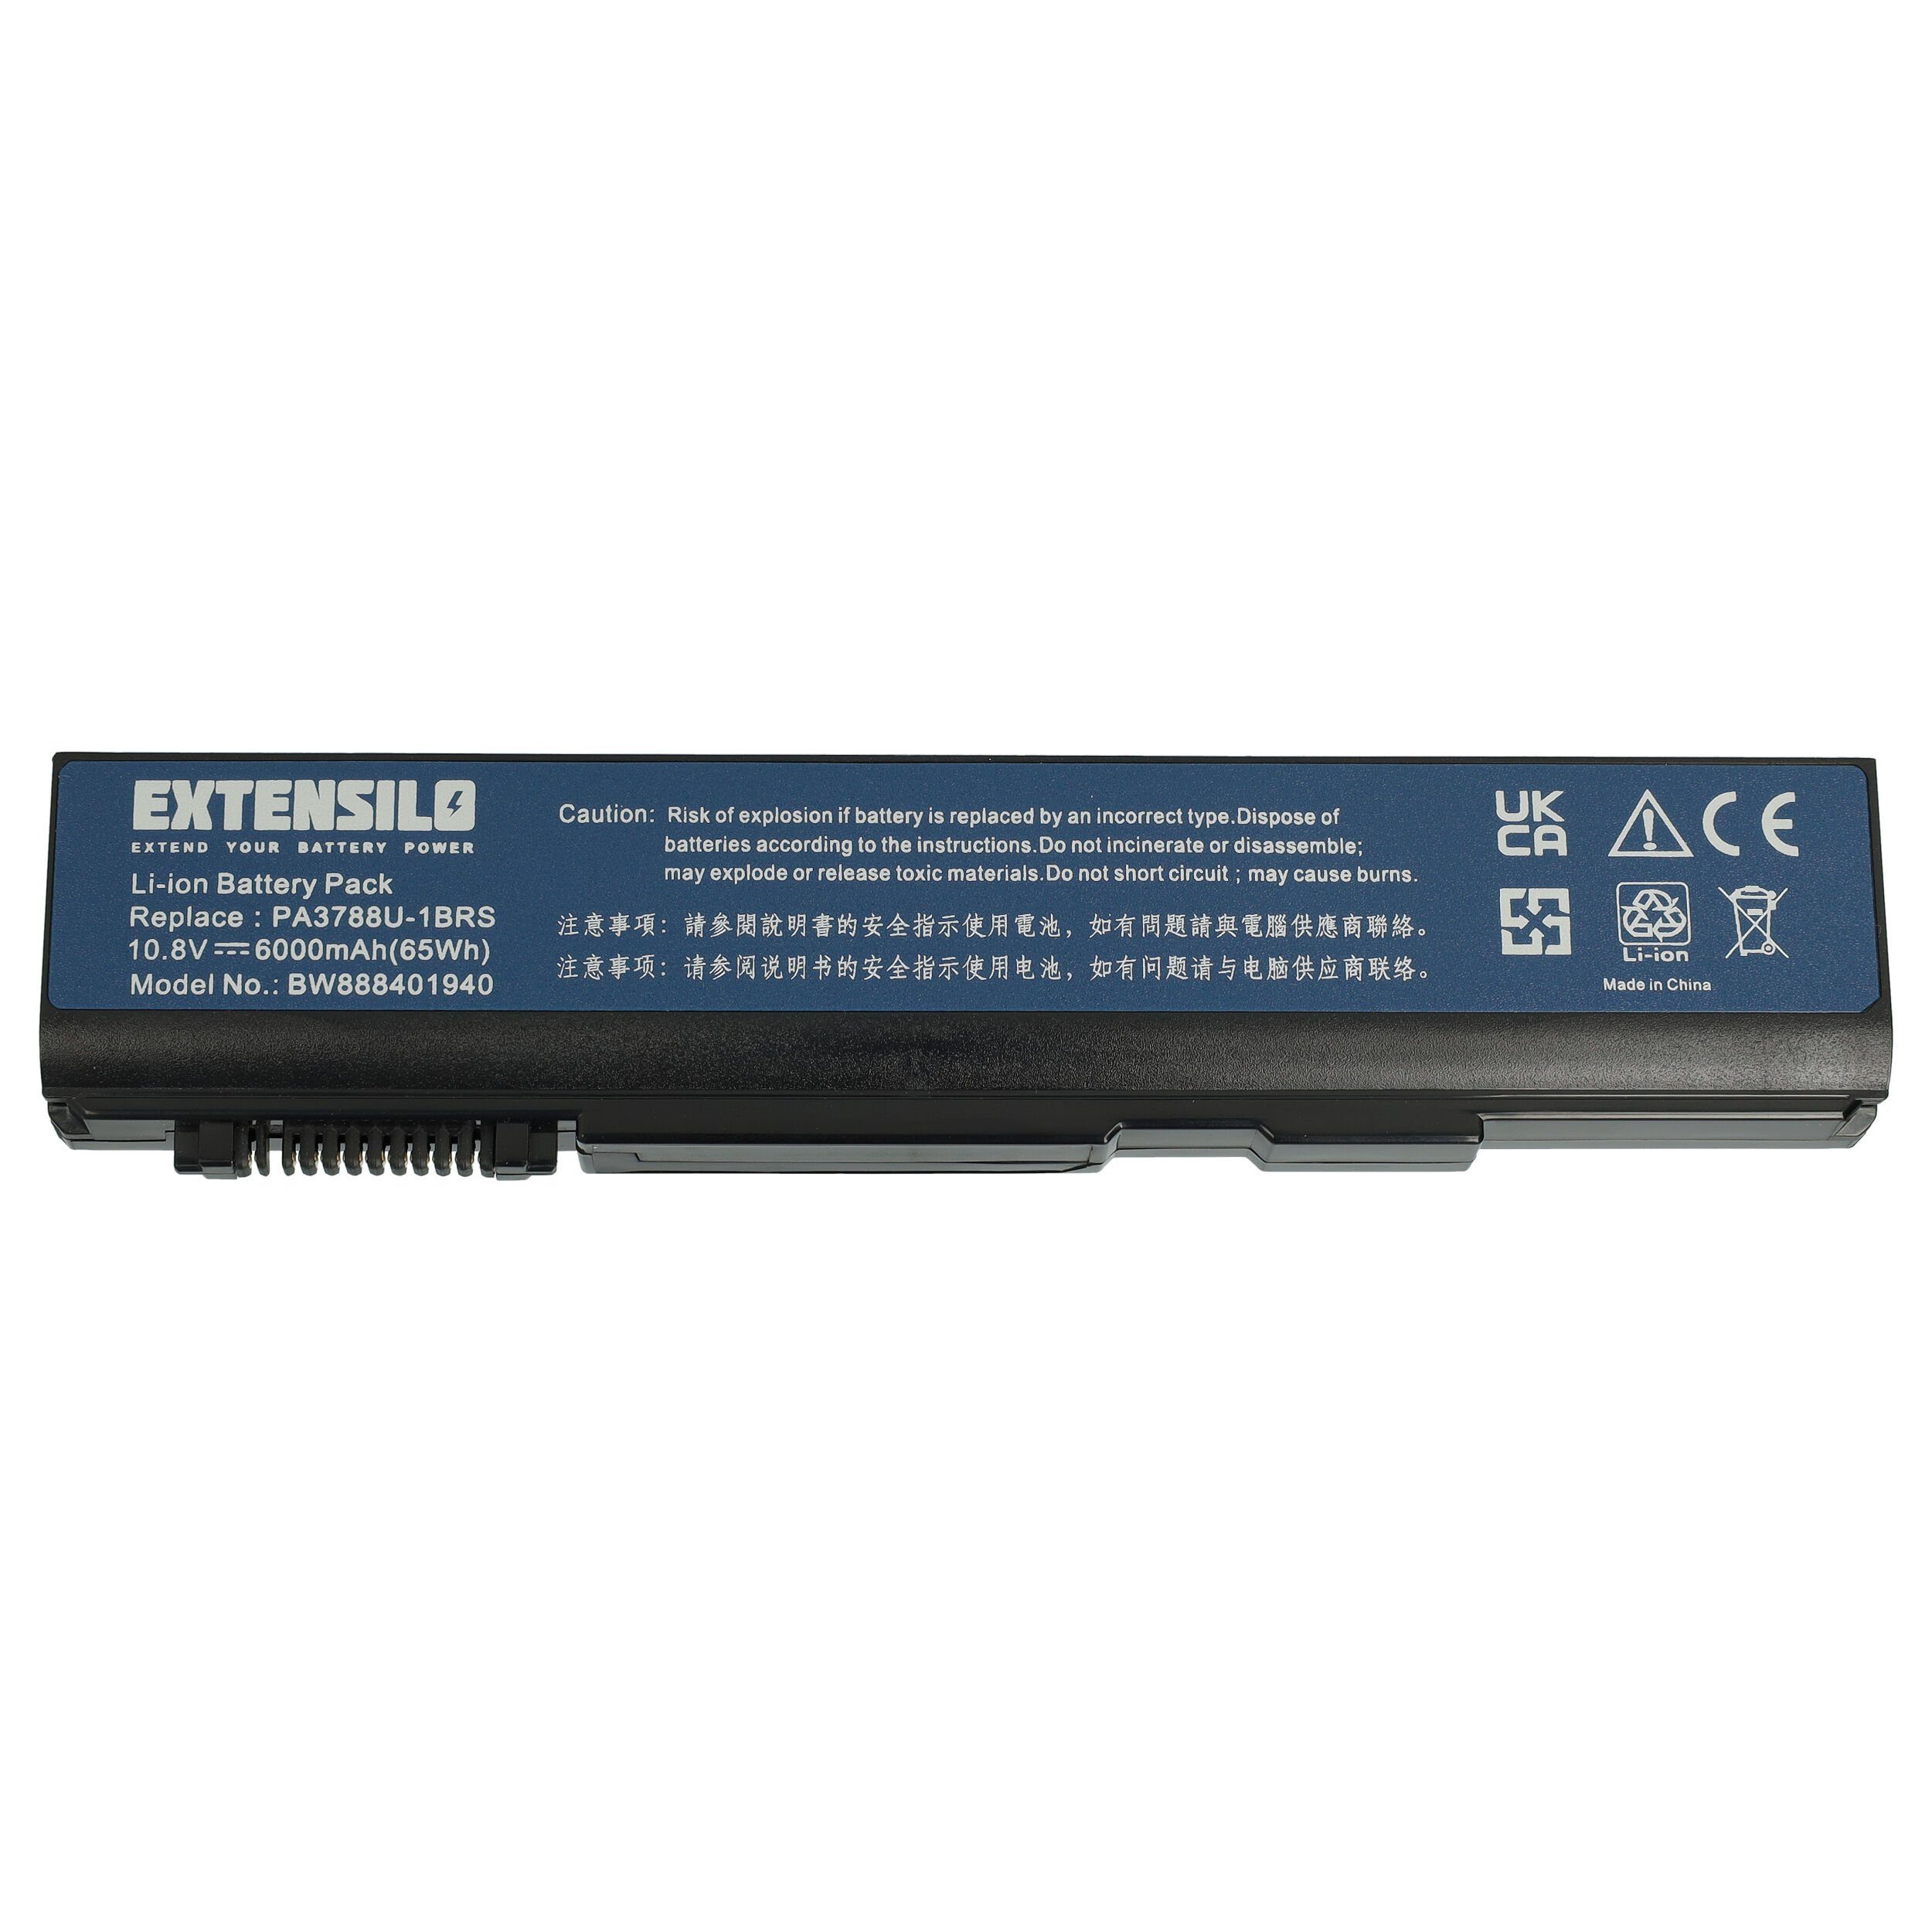 Extensilo kompatibel mit Toshiba Tecra S11 Series, S11-16P, S11-173 Laptop-Akku Li-Ion 6000 mAh (10,8 V)